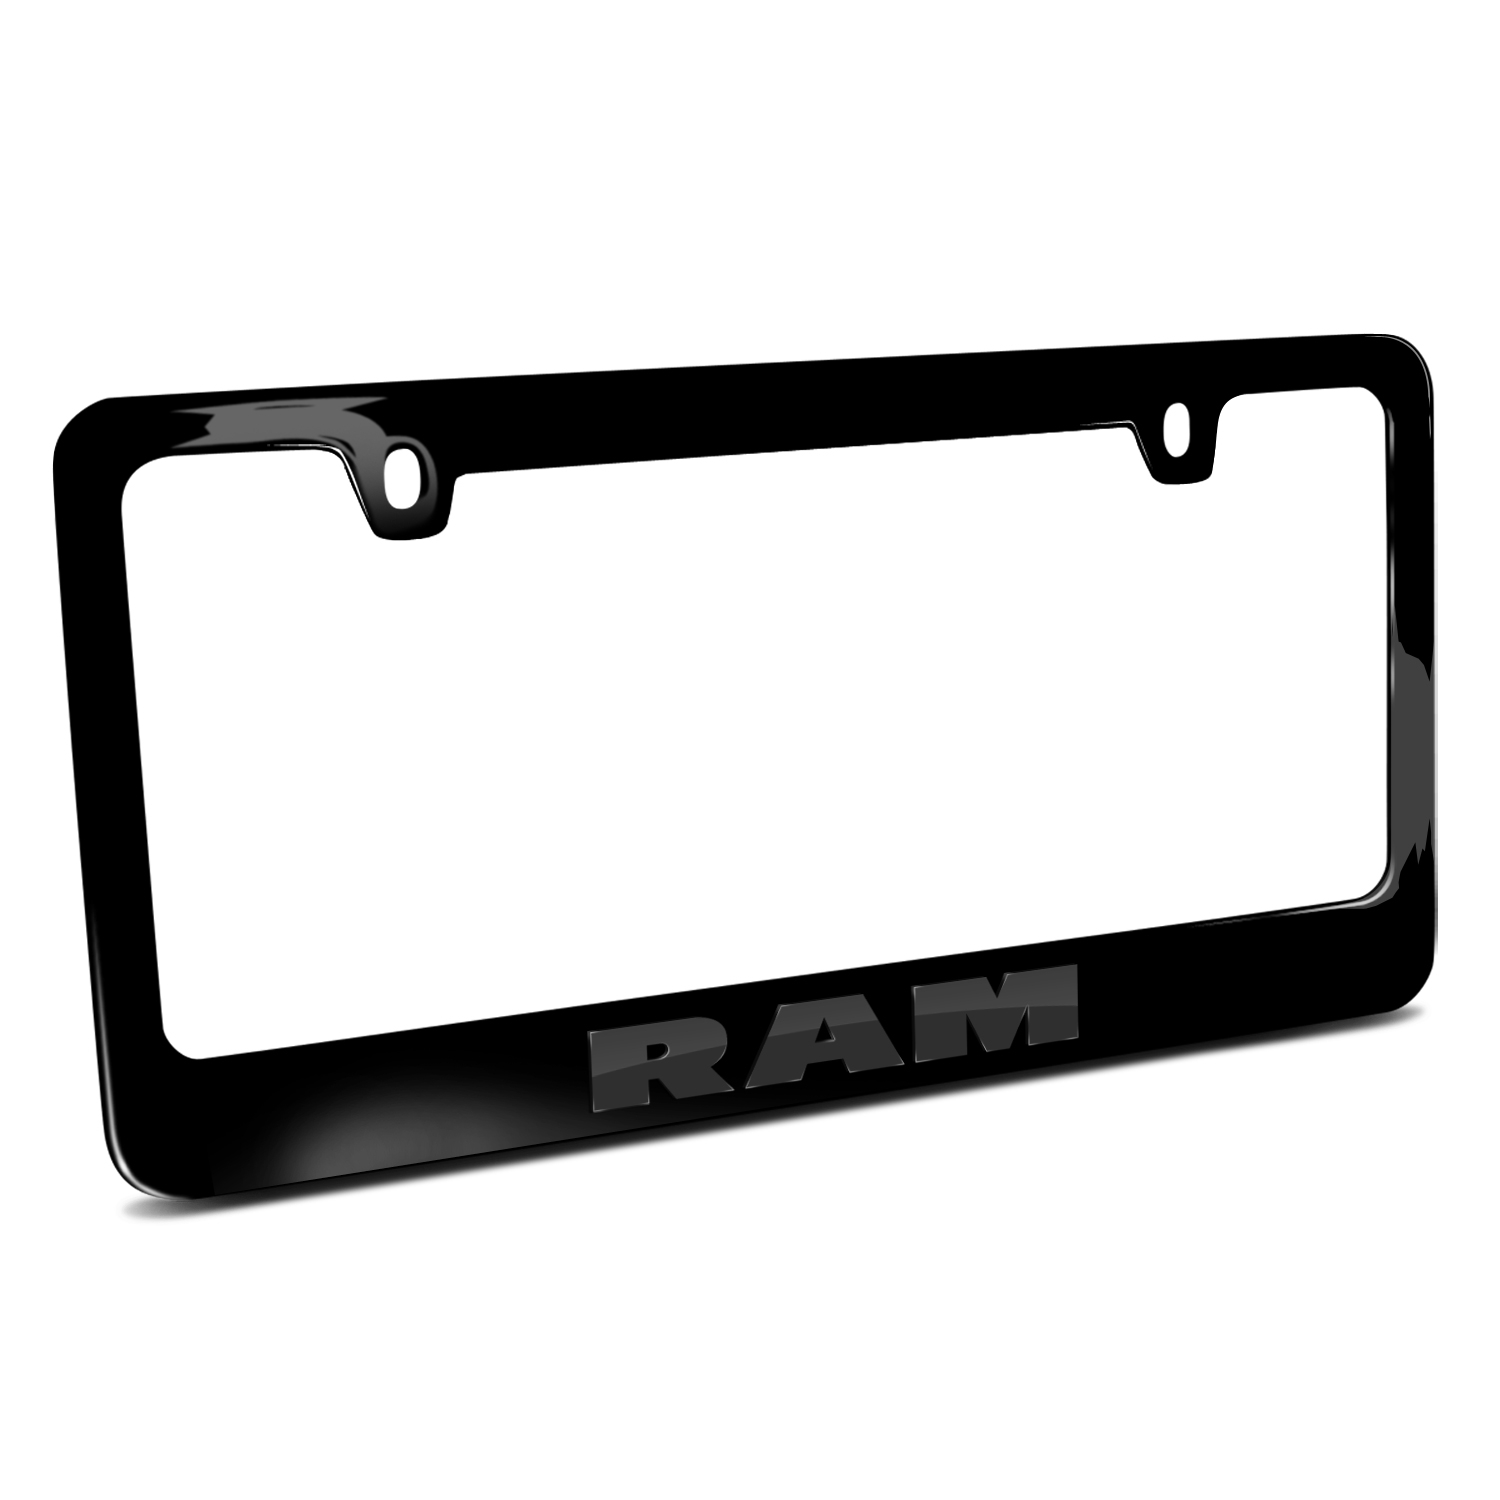 RAM in 3D Black on Black Metal License Plate Frame